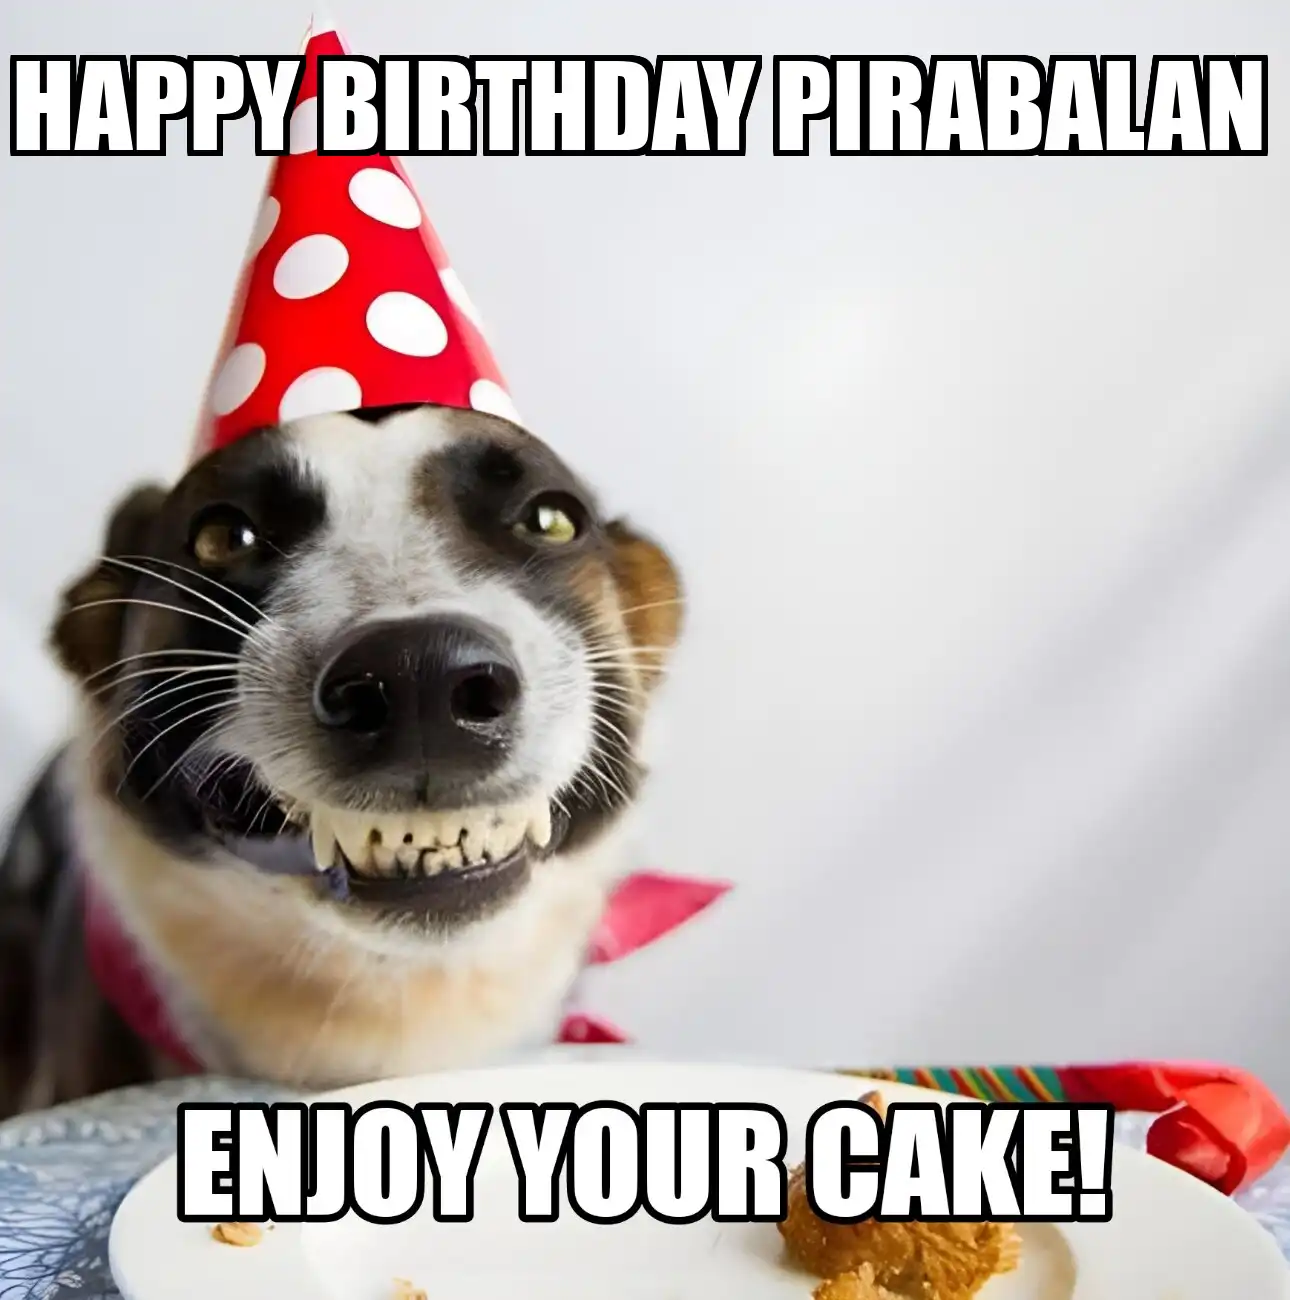 Happy Birthday Pirabalan Enjoy Your Cake Dog Meme